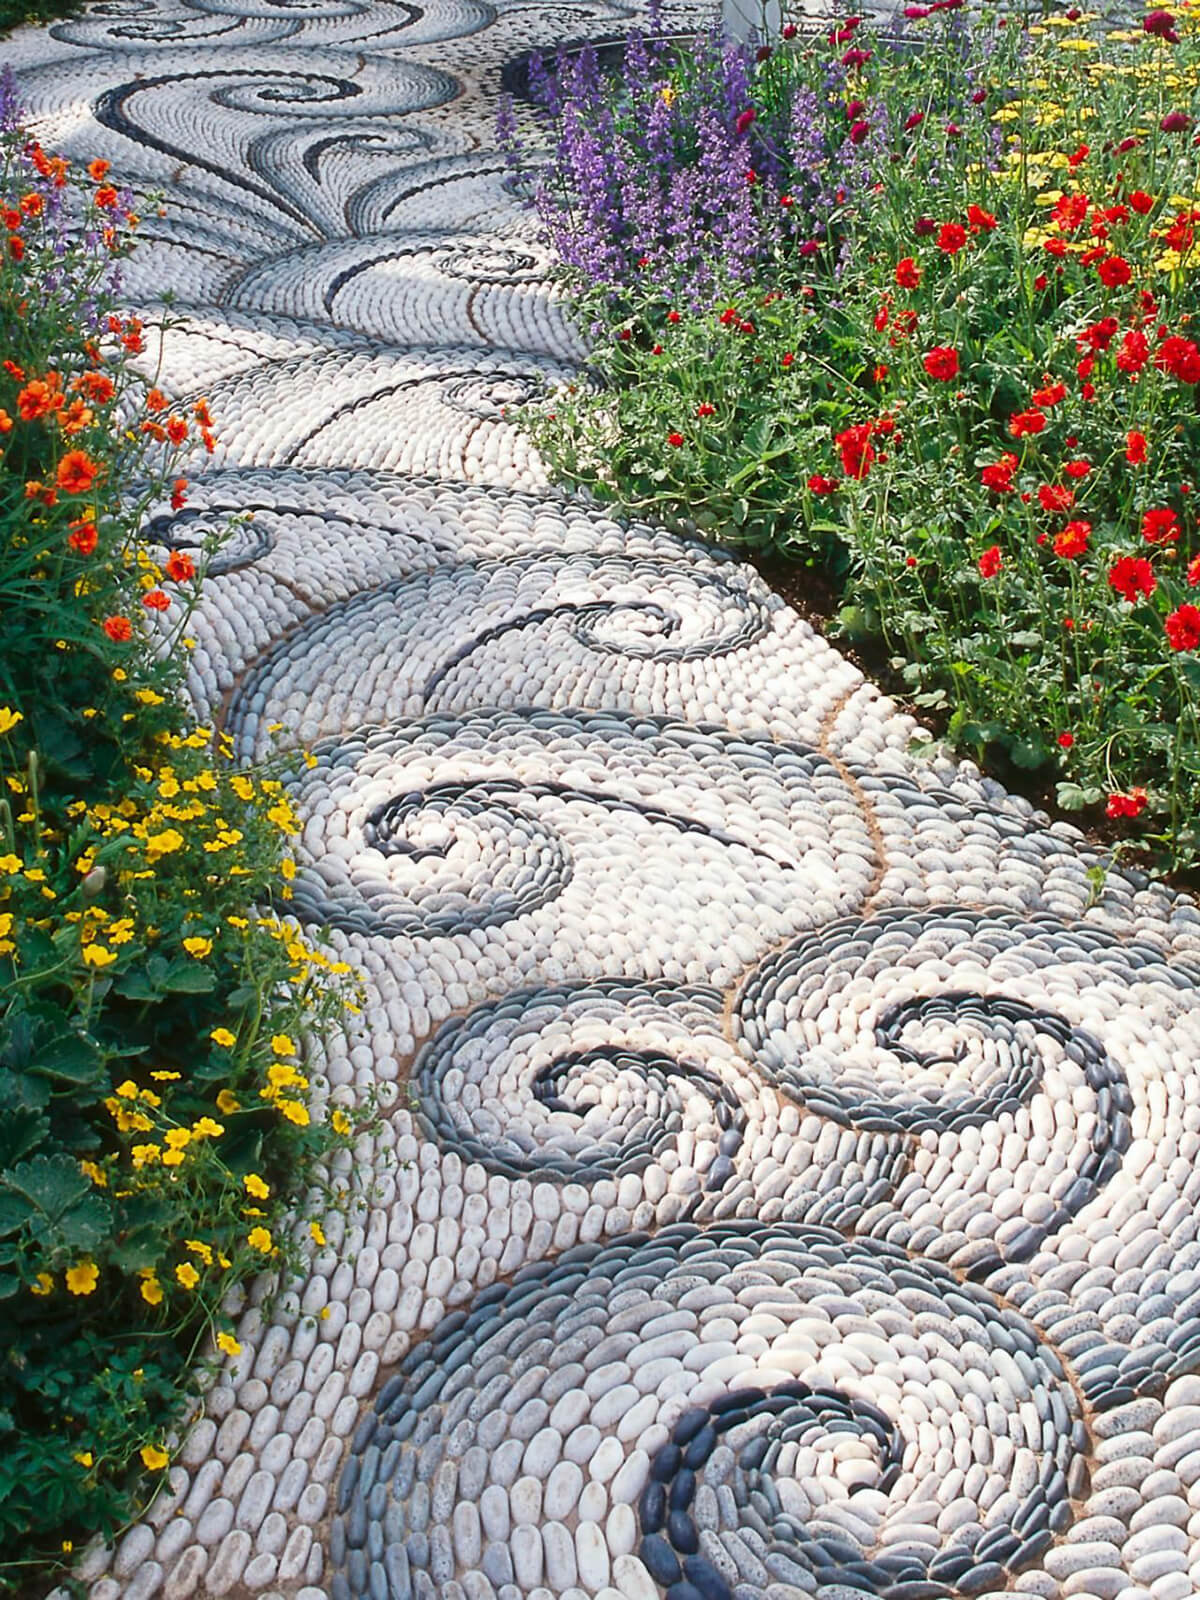 16 Design Ideas for Beautiful Garden Paths - Style Motivation